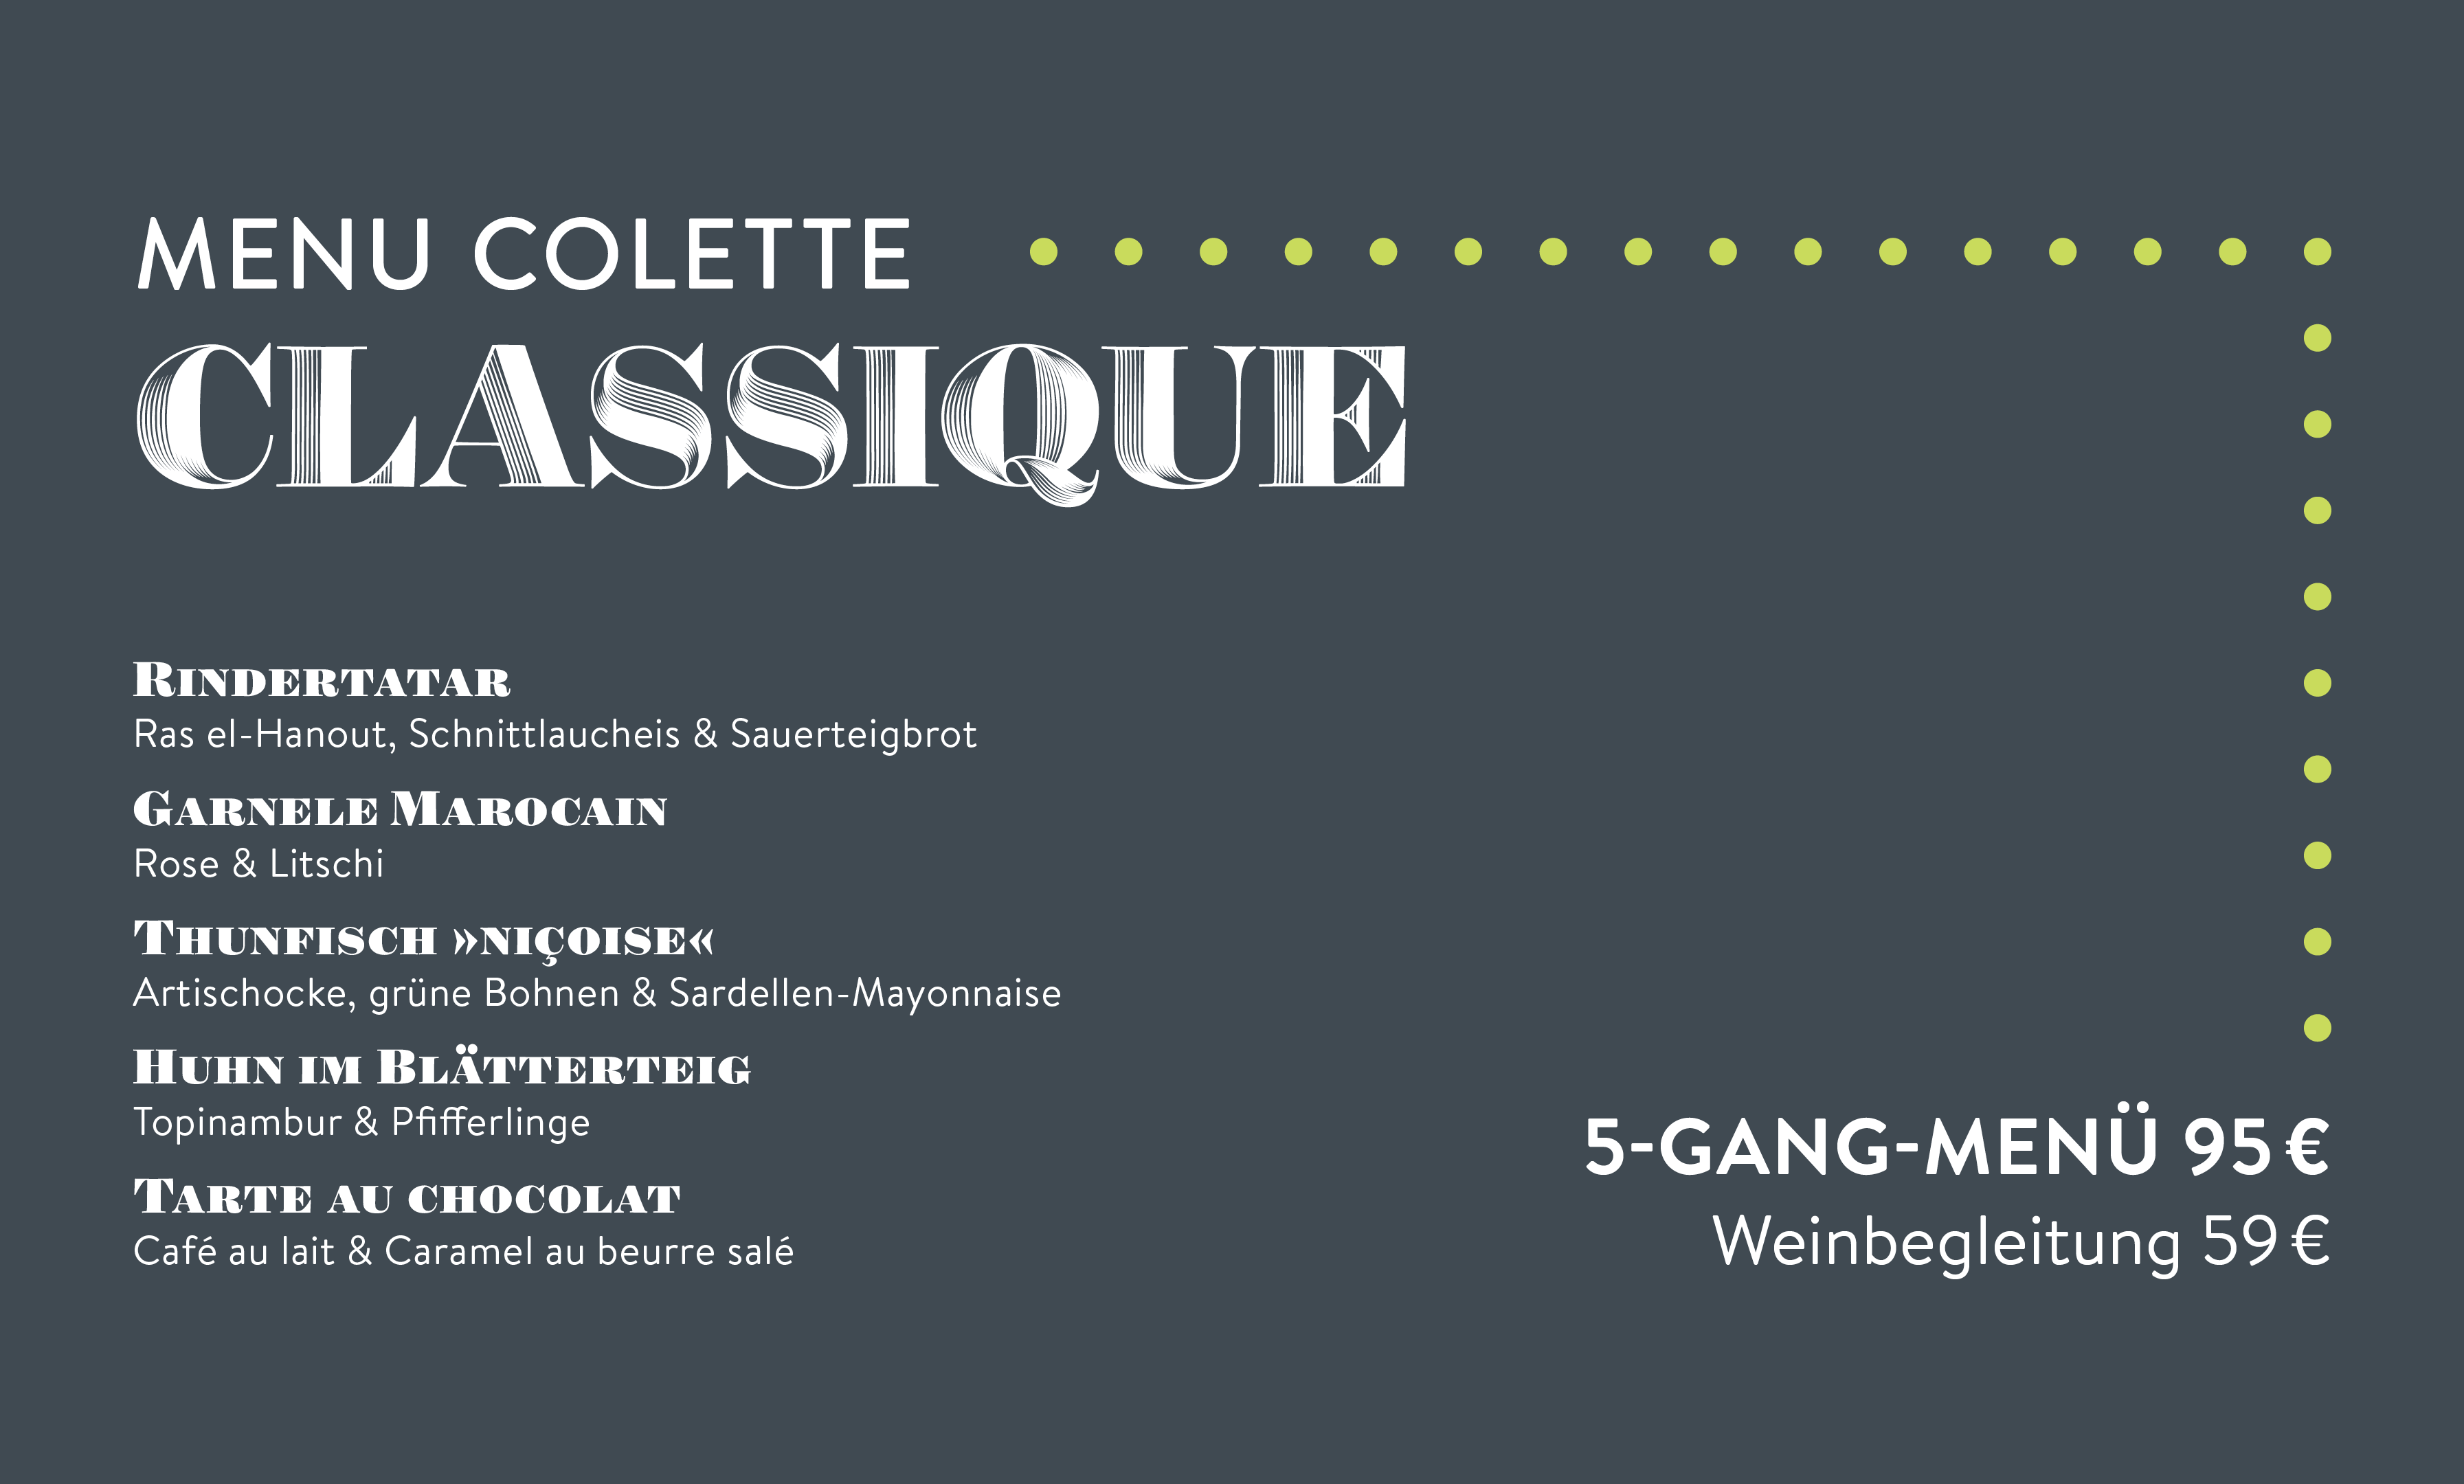 Speisekarte Menu Colette Classique 5-Gang-Menü